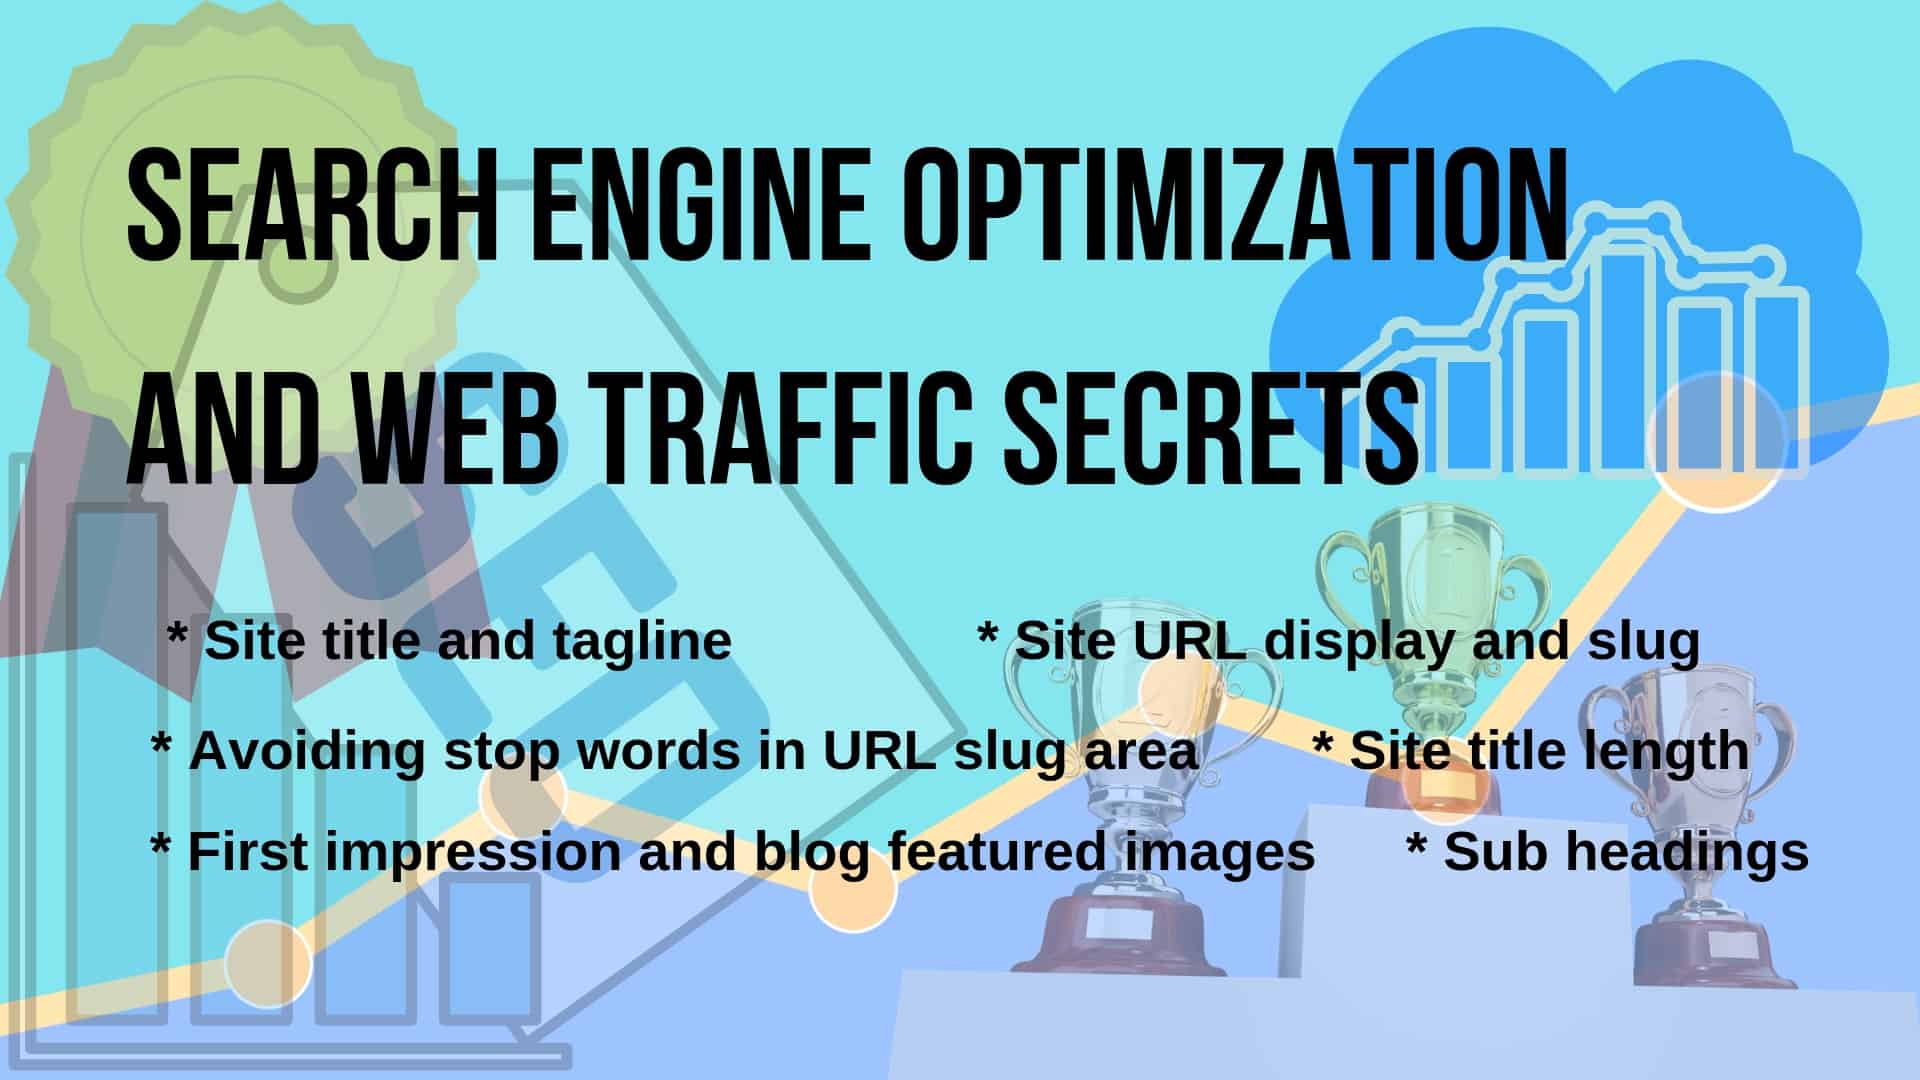 Search engine optimization and web traffic secrets